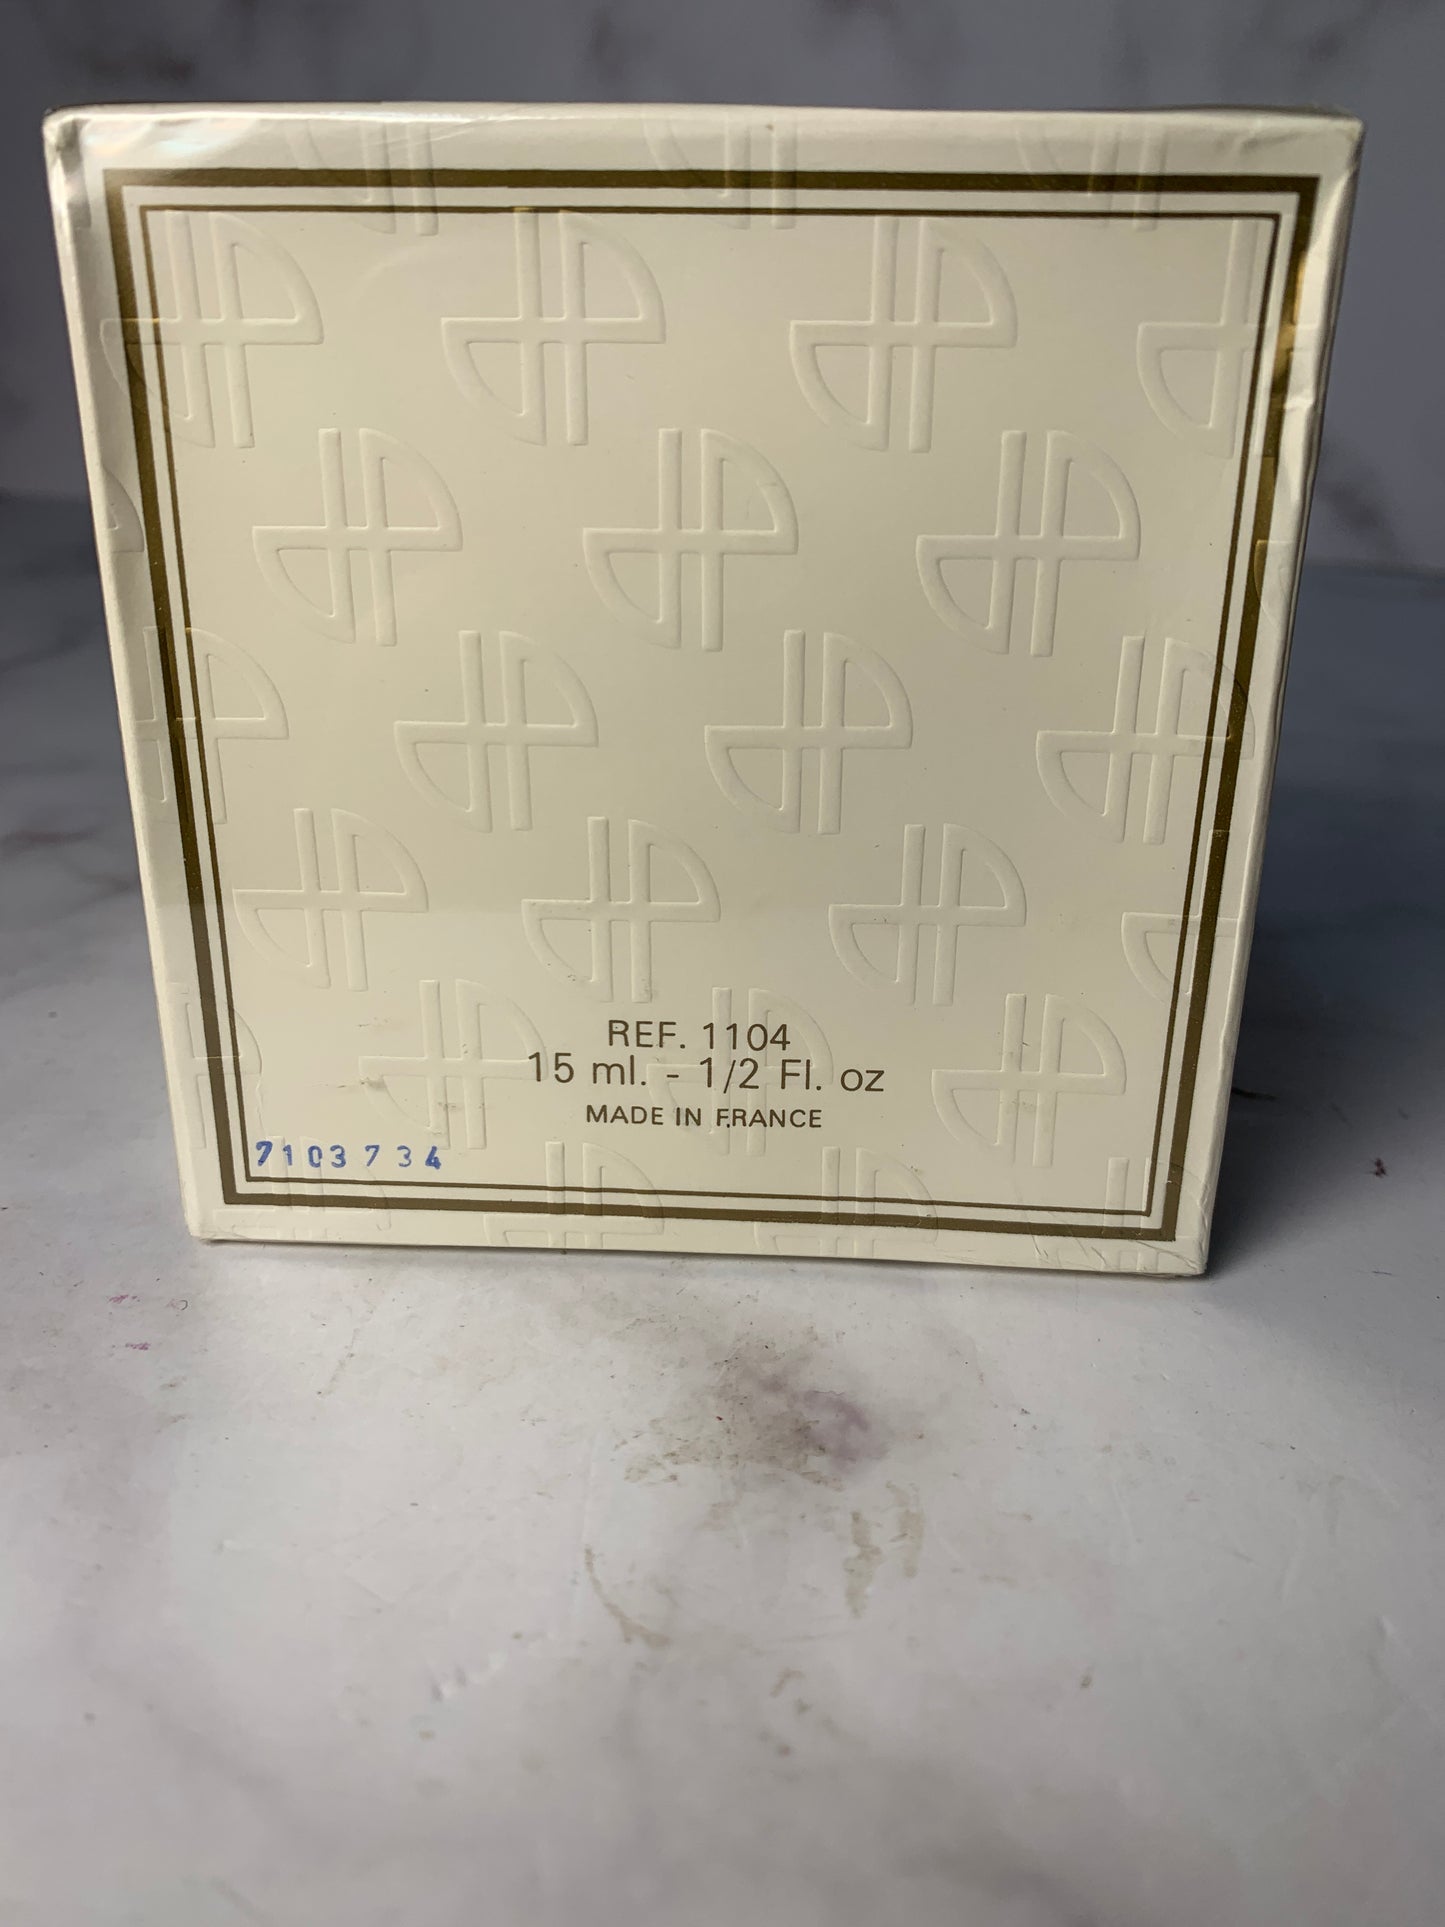 Rare Jean Patou Joy Parfum Perfume 15ml  1/2 oz   - 220124 7